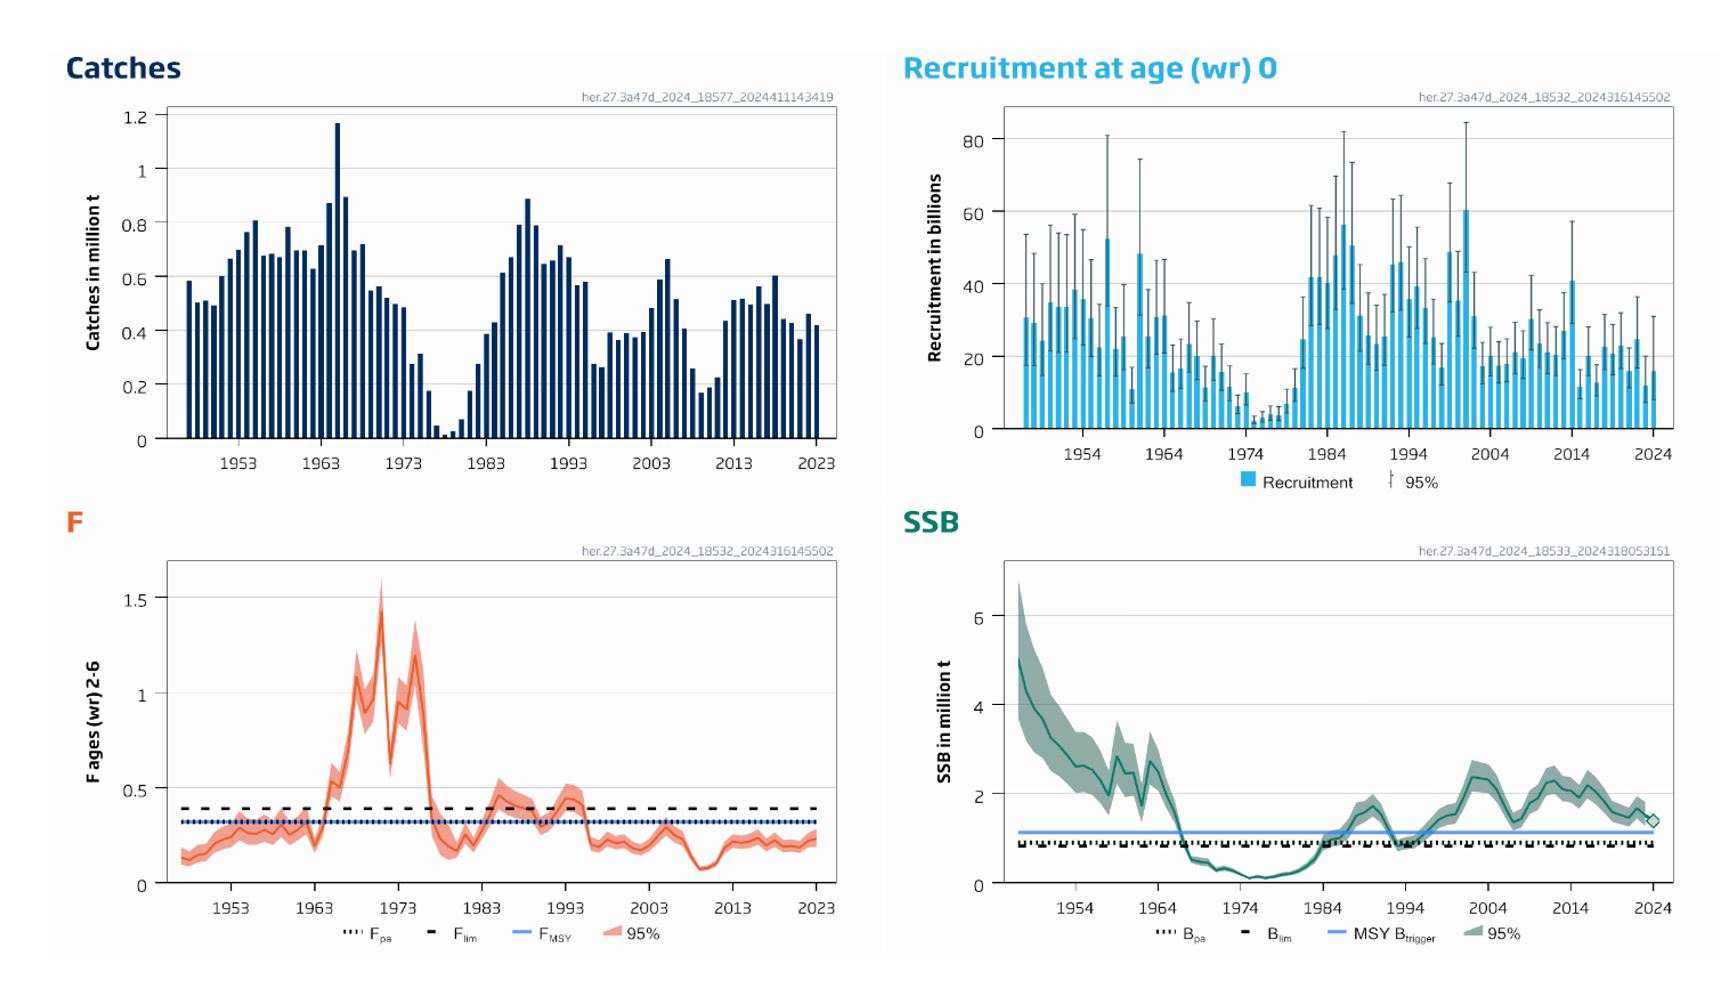 Fire grafer som viser fangster, rekruttering og bestandsutvikling for nordsjøsild fra 1950-tallet til 2023